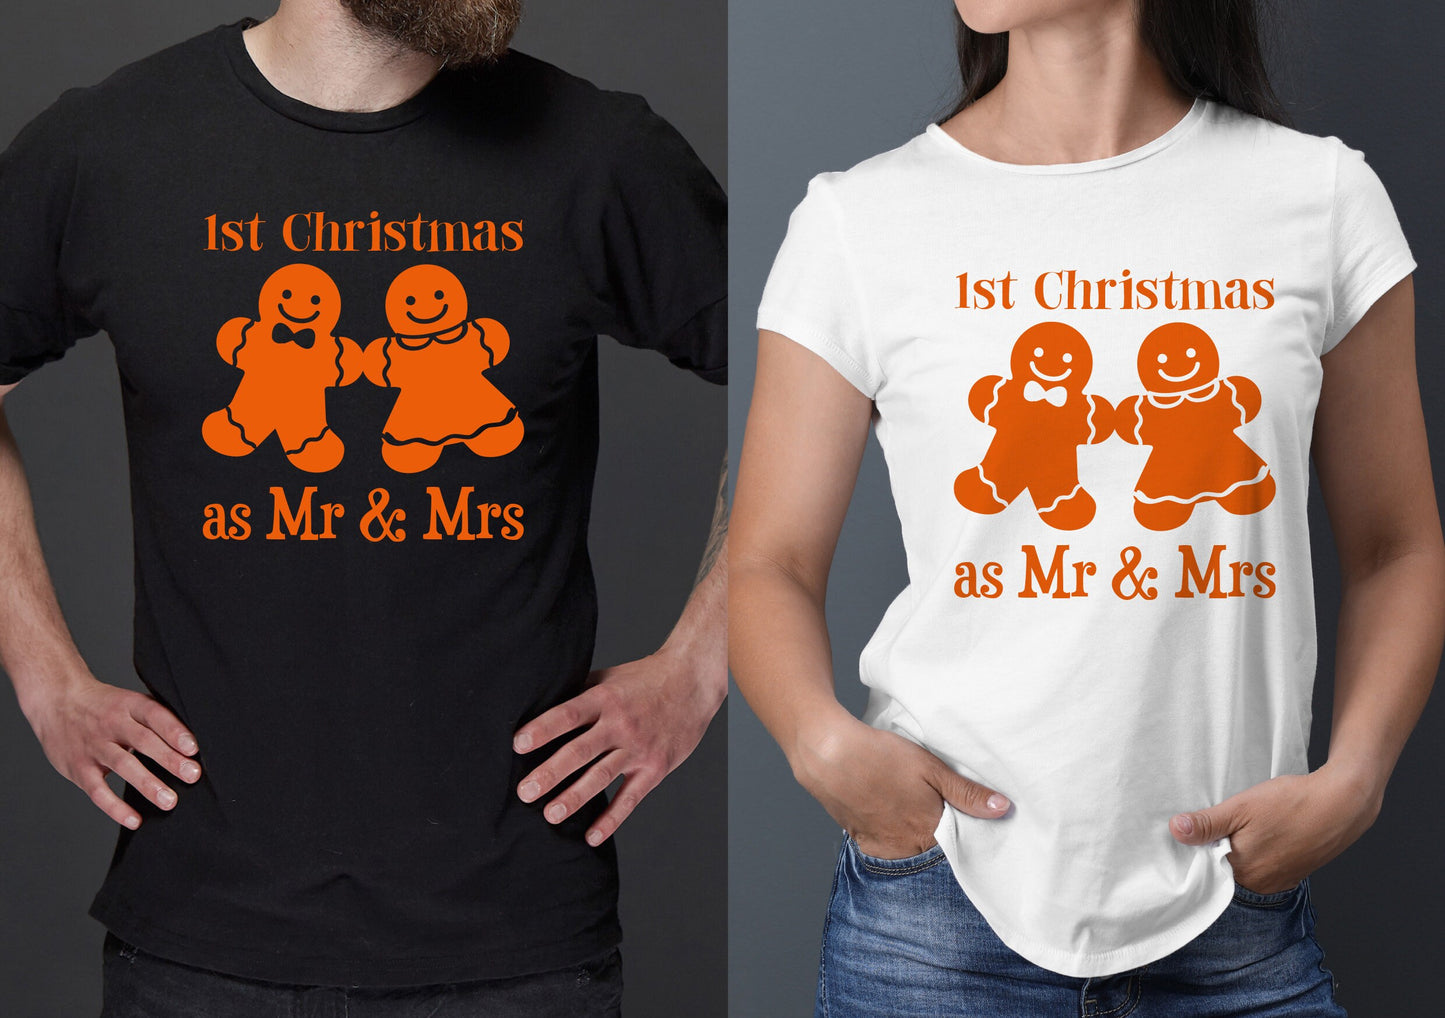 Gingerbread 1st Christmas as Mr & Mrs T-Shirt | Xmas Slogan tshirt | Hubby Wifey Married